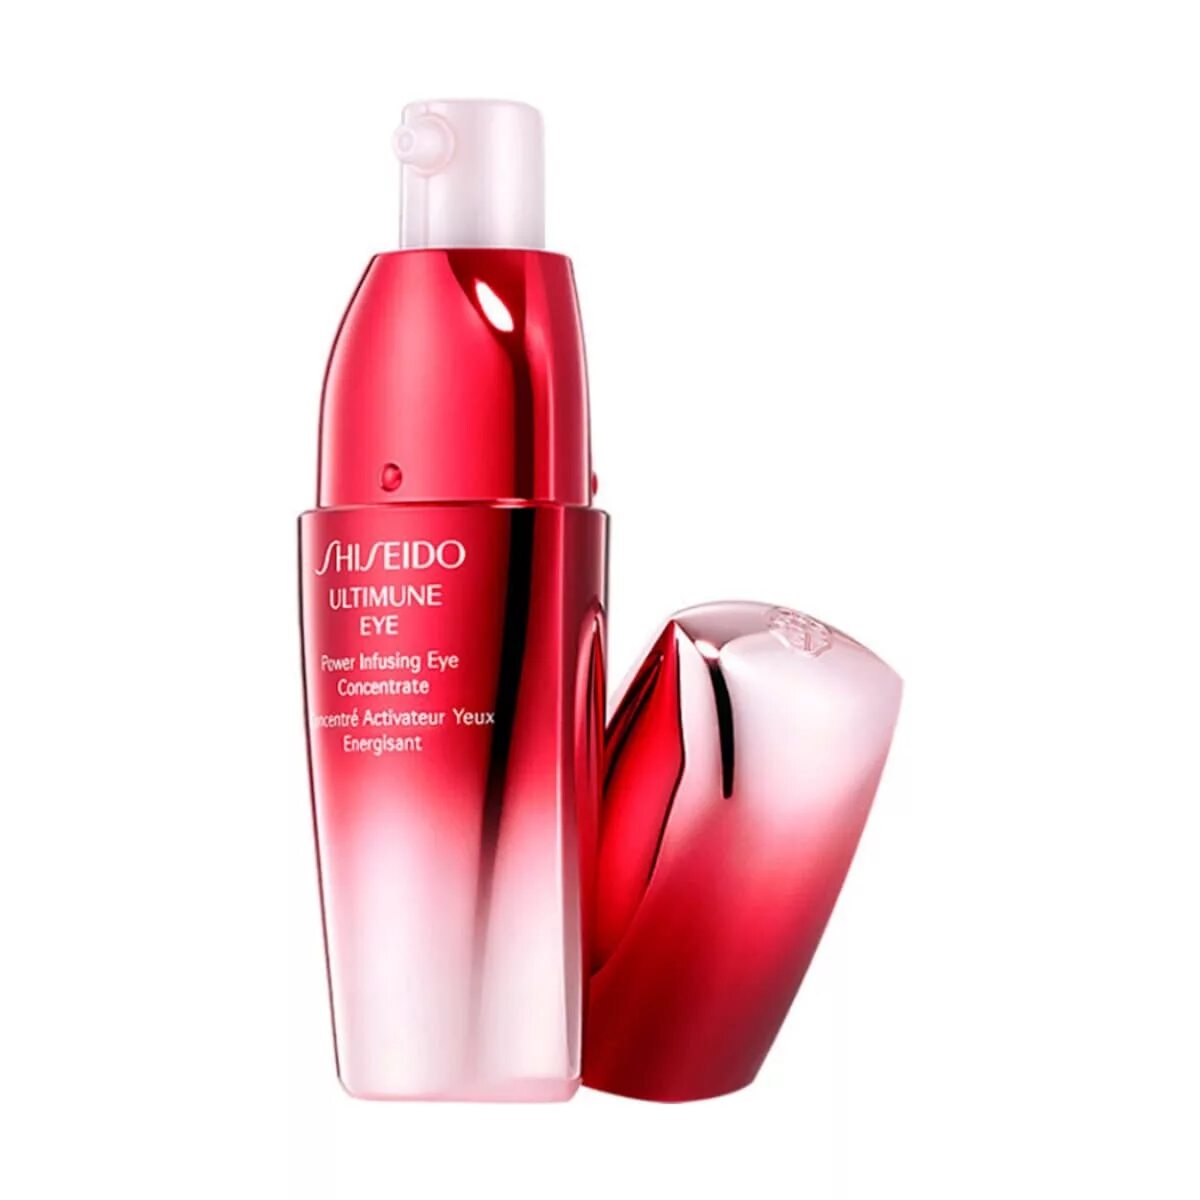 Shiseido concentrate. Ультимьюн шисейдо. Shiseido Ultimune Eye Power infusing. Shiseido Ultimune концентрат. Shiseido Ultimate.